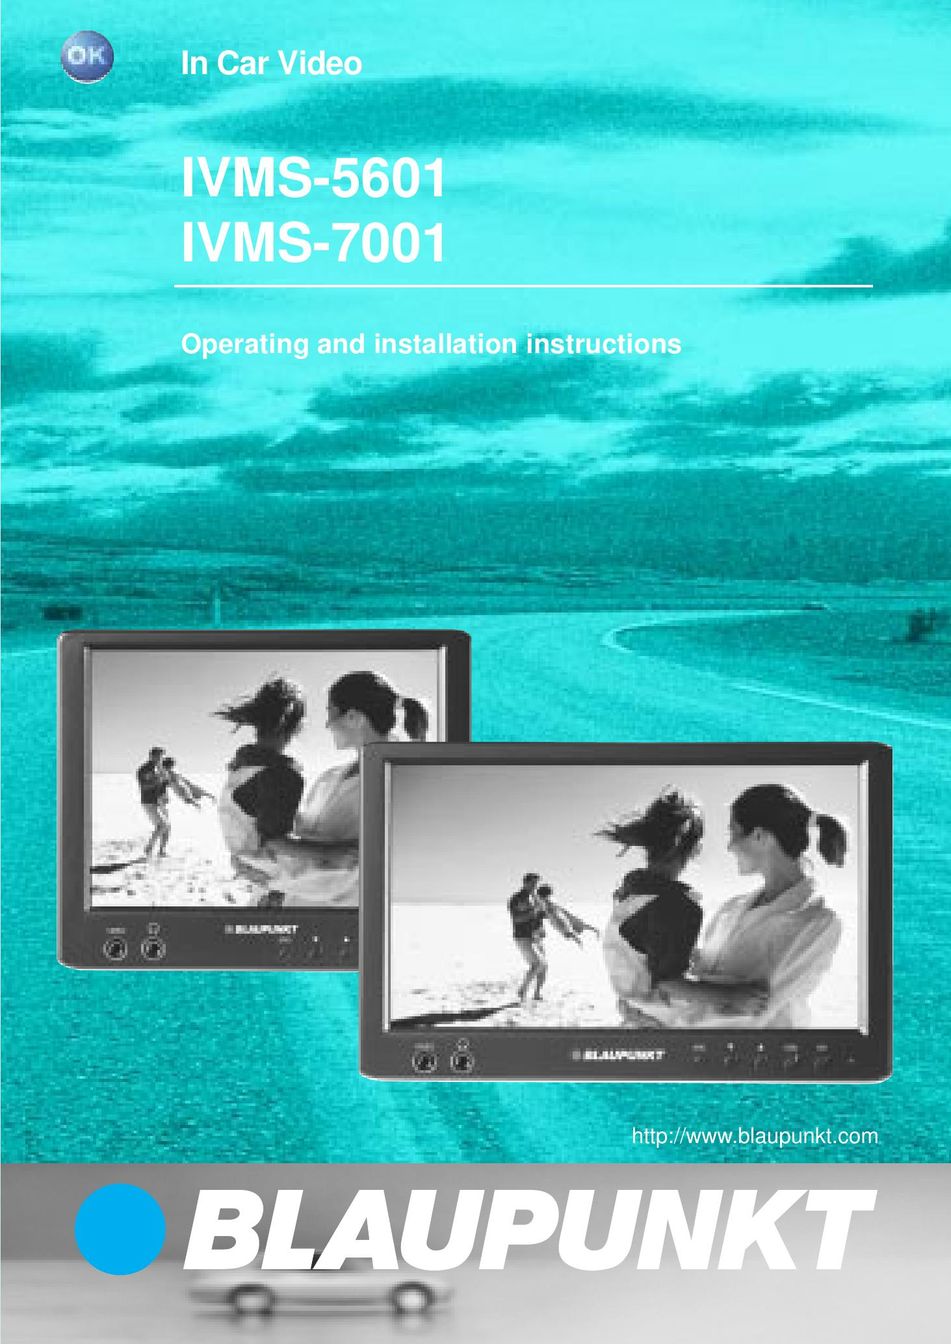 Blaupunkt IVMS-5601 Car Video System User Manual